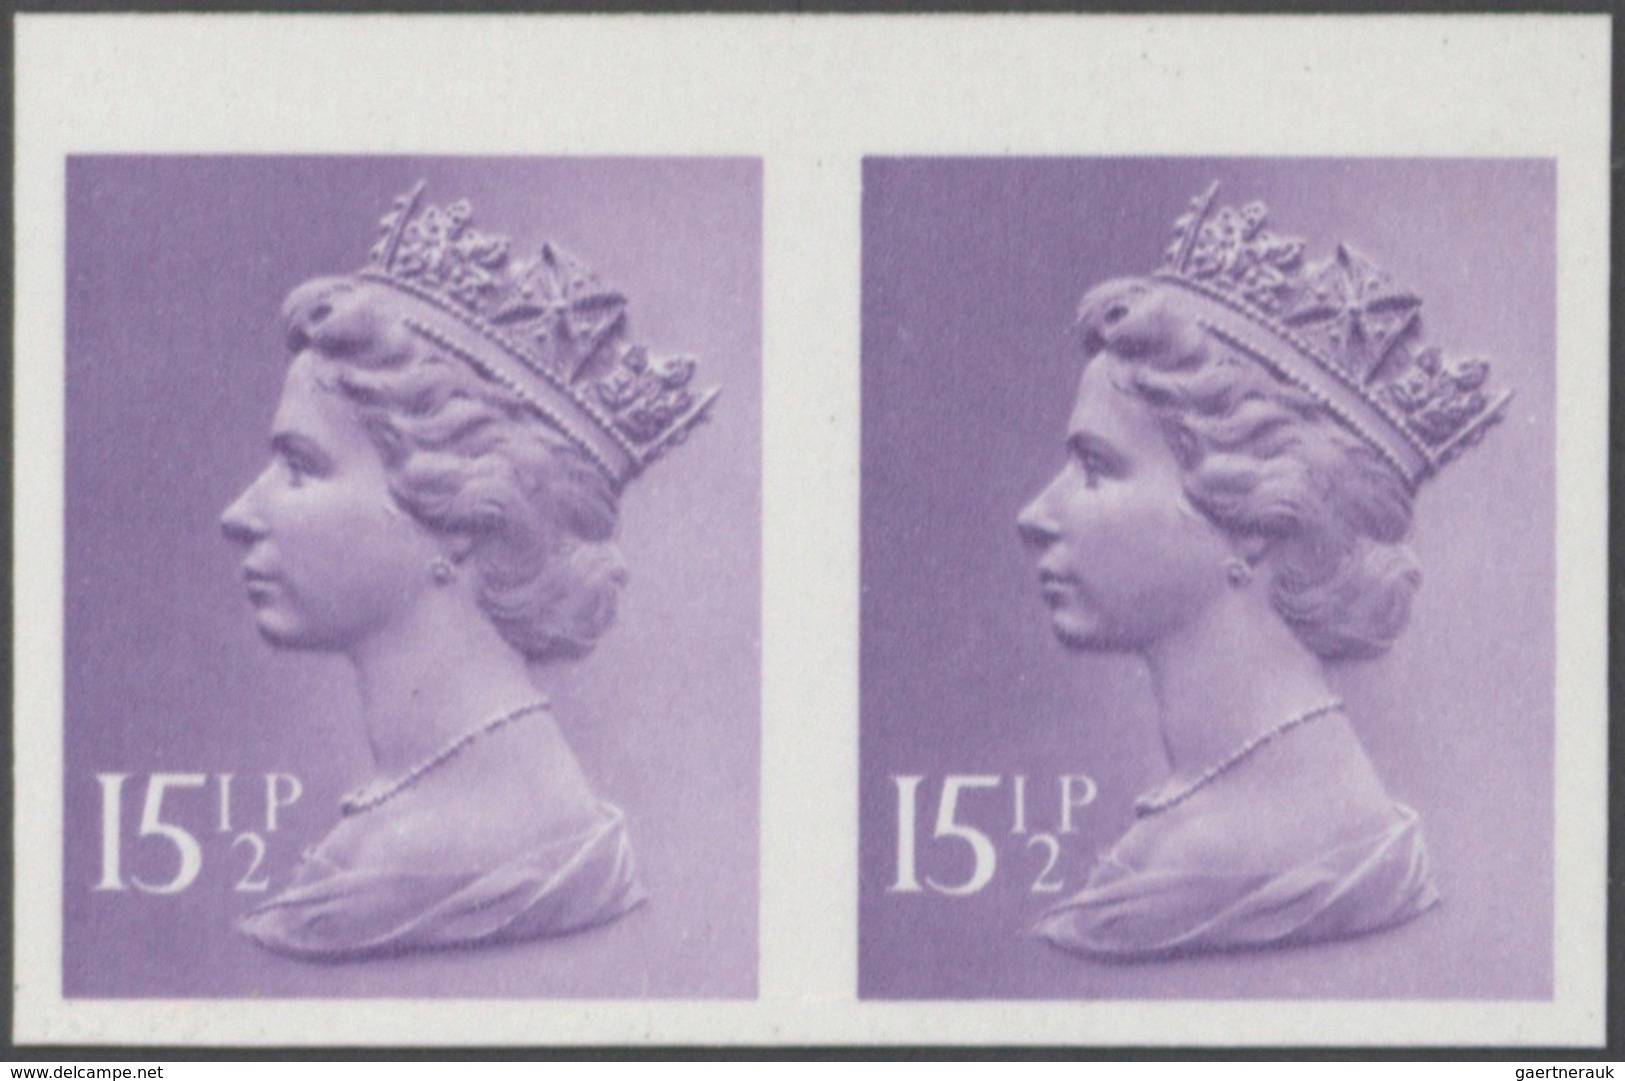 Großbritannien - Machin: 1981, 15 1/2 P. Pale Violet, Imperforated Horizontal Pair, Unmounted Mint. - Machins